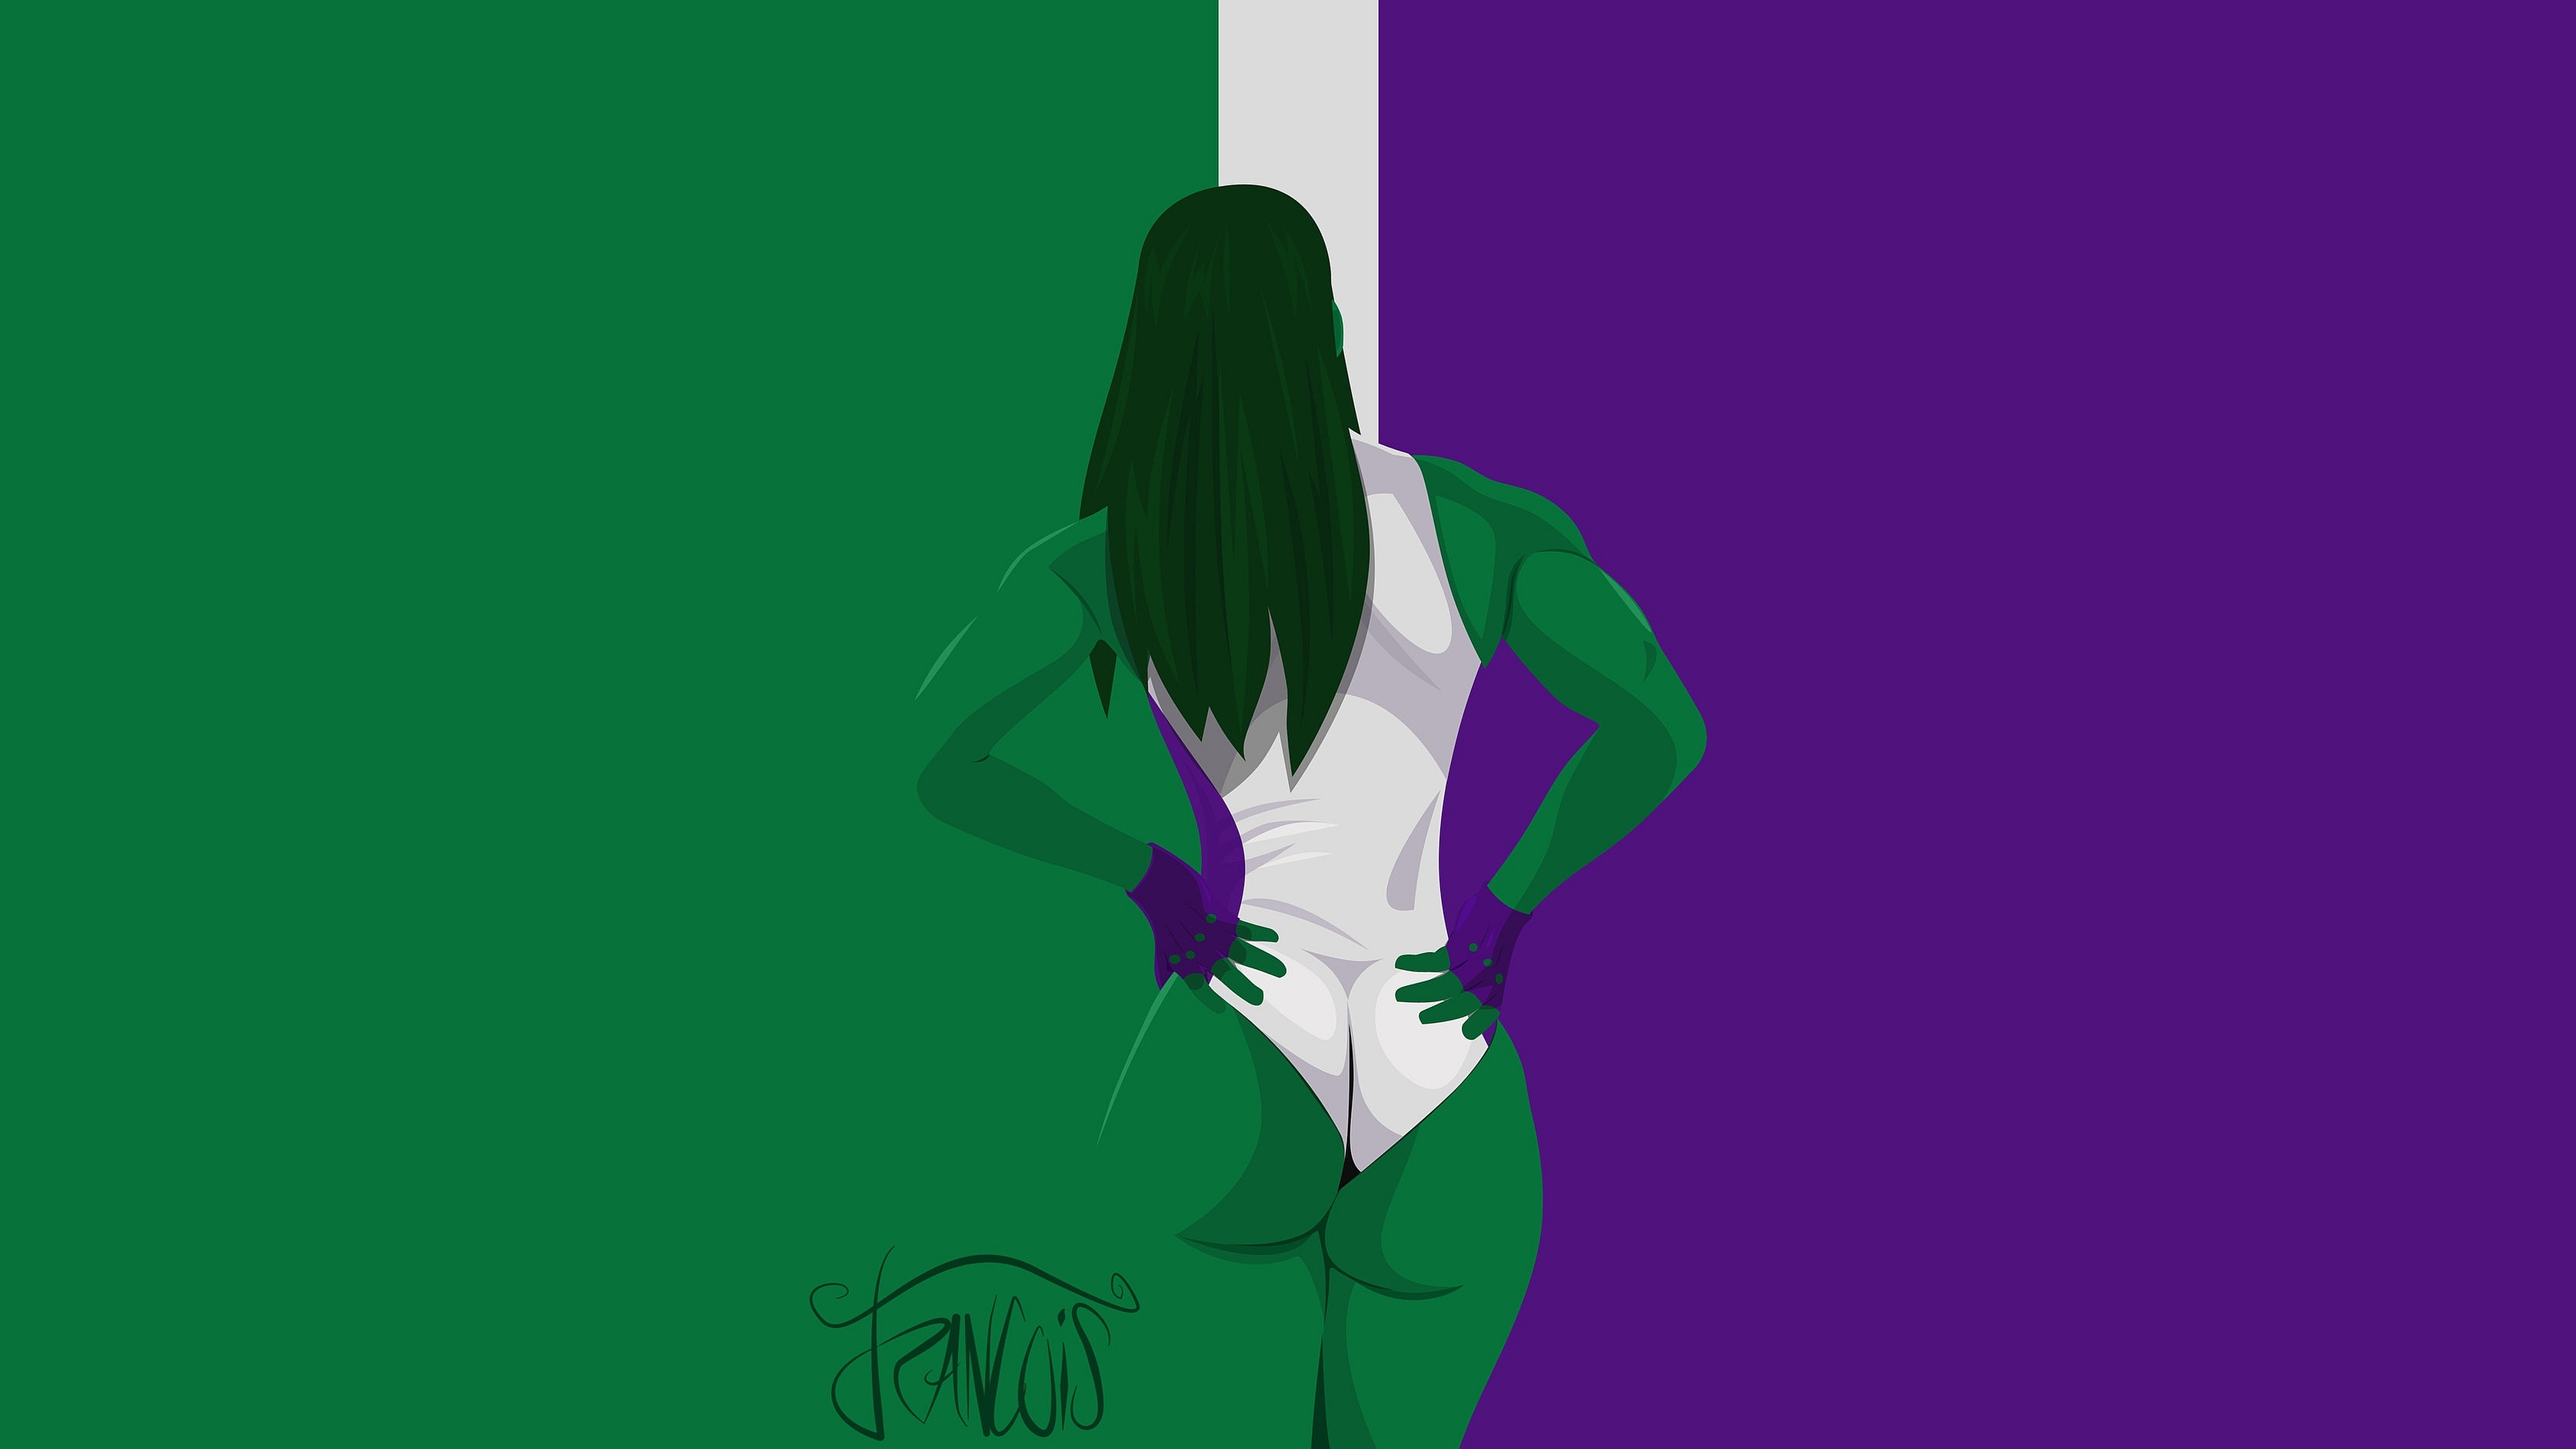 she wallpaper,green,purple,violet,animation,illustration